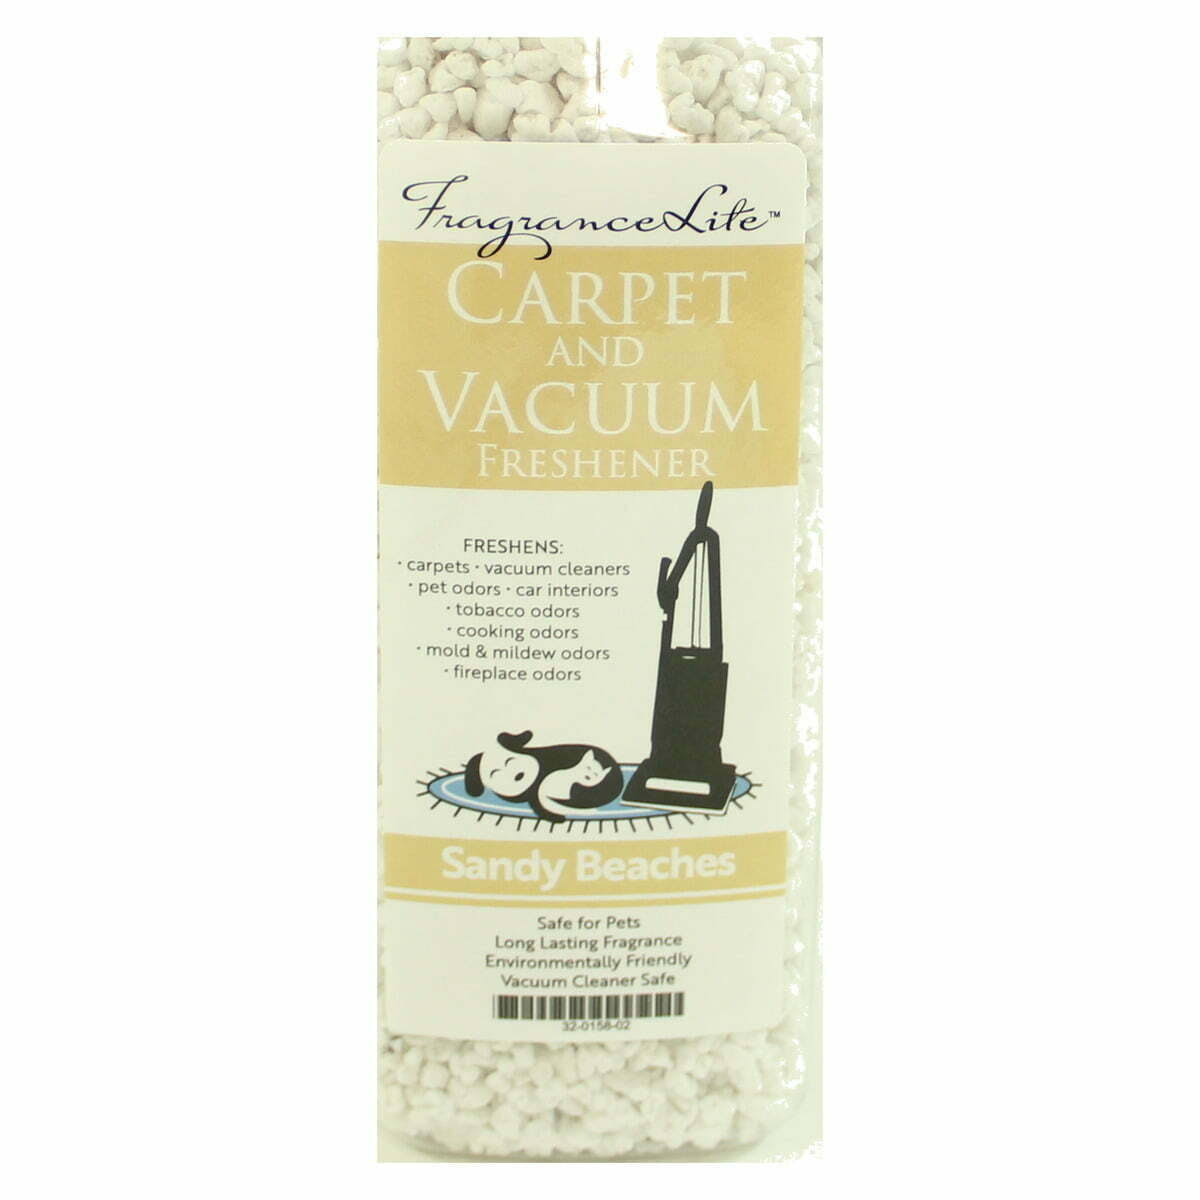 Sandy beaches Fragrance Lite Carpet and Vacuum Freshener Pet Safe Vacuum Cleaner Safe